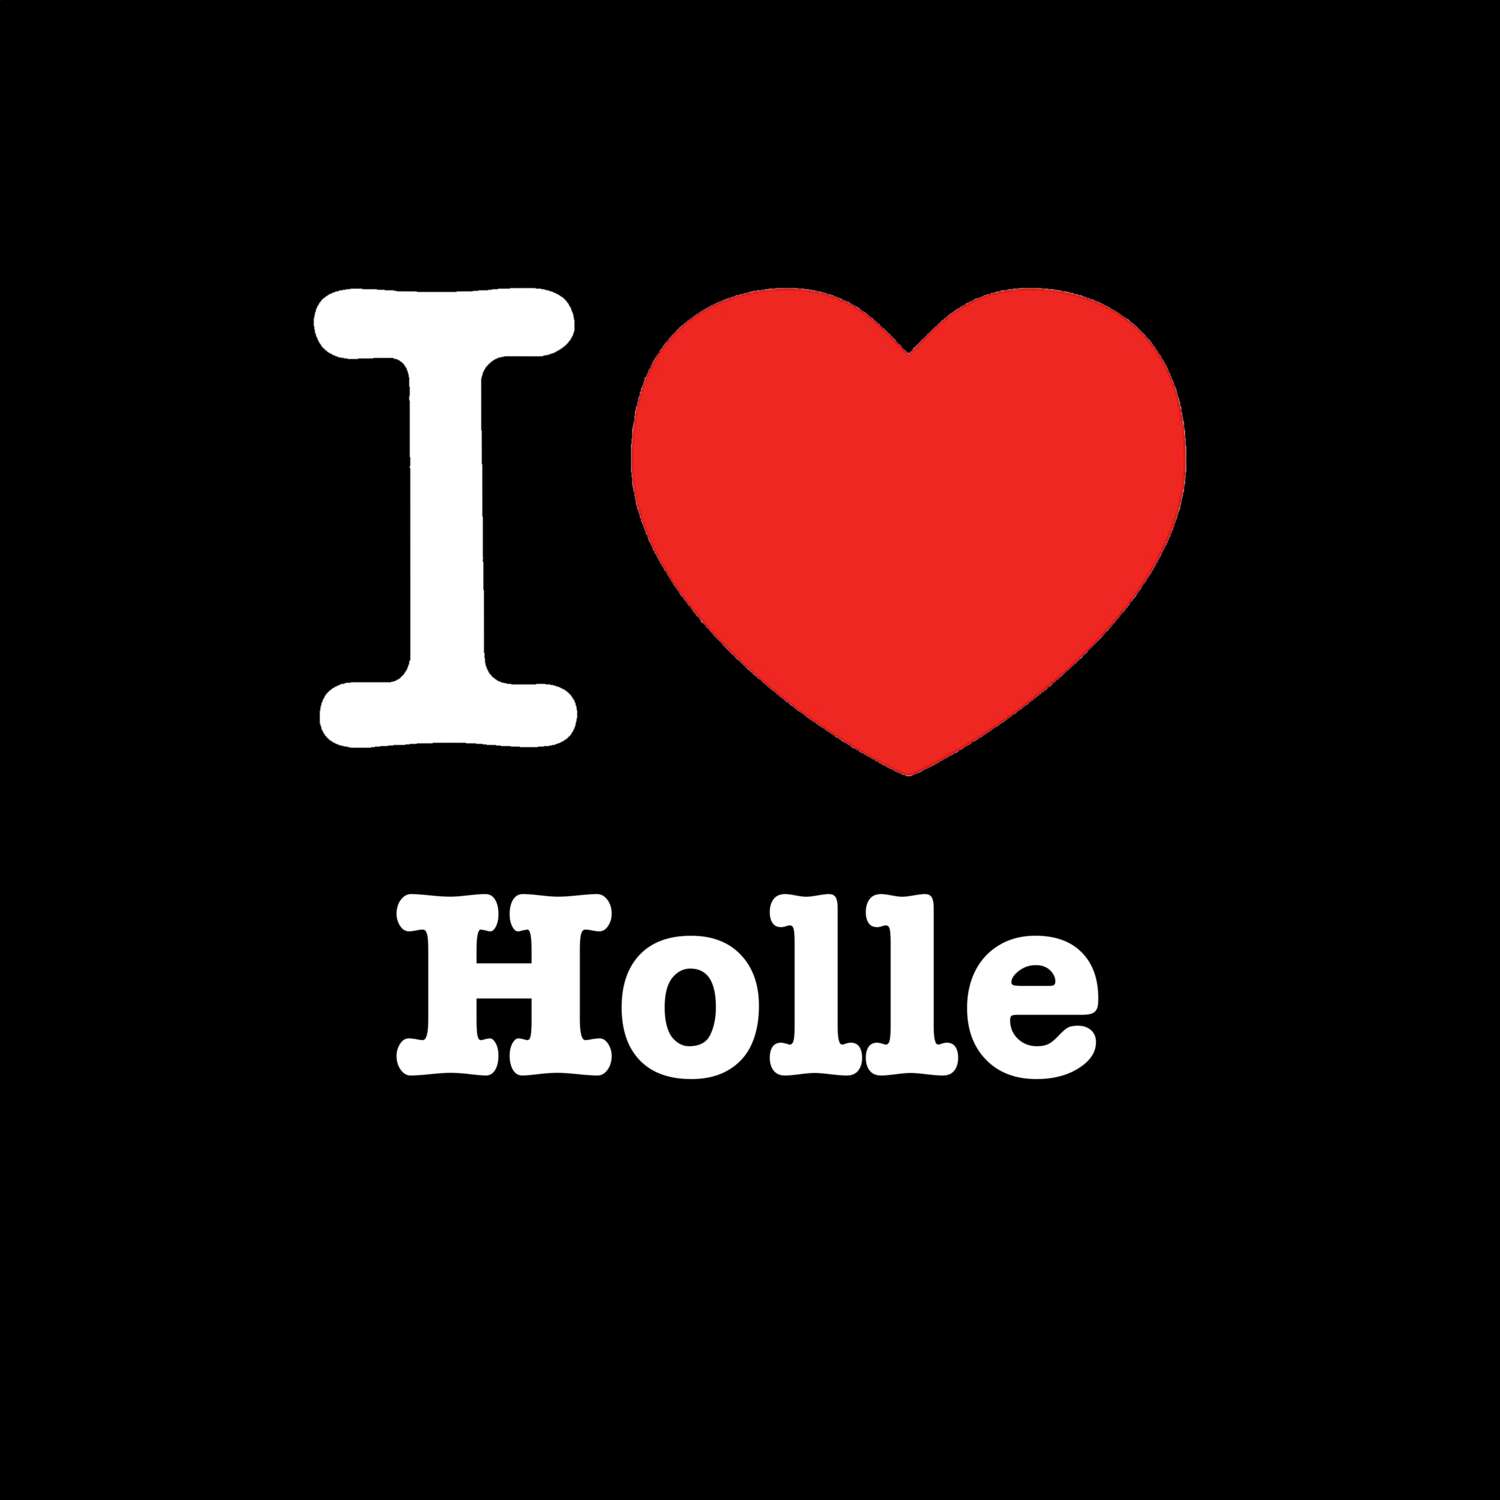 Holle T-Shirt »I love«